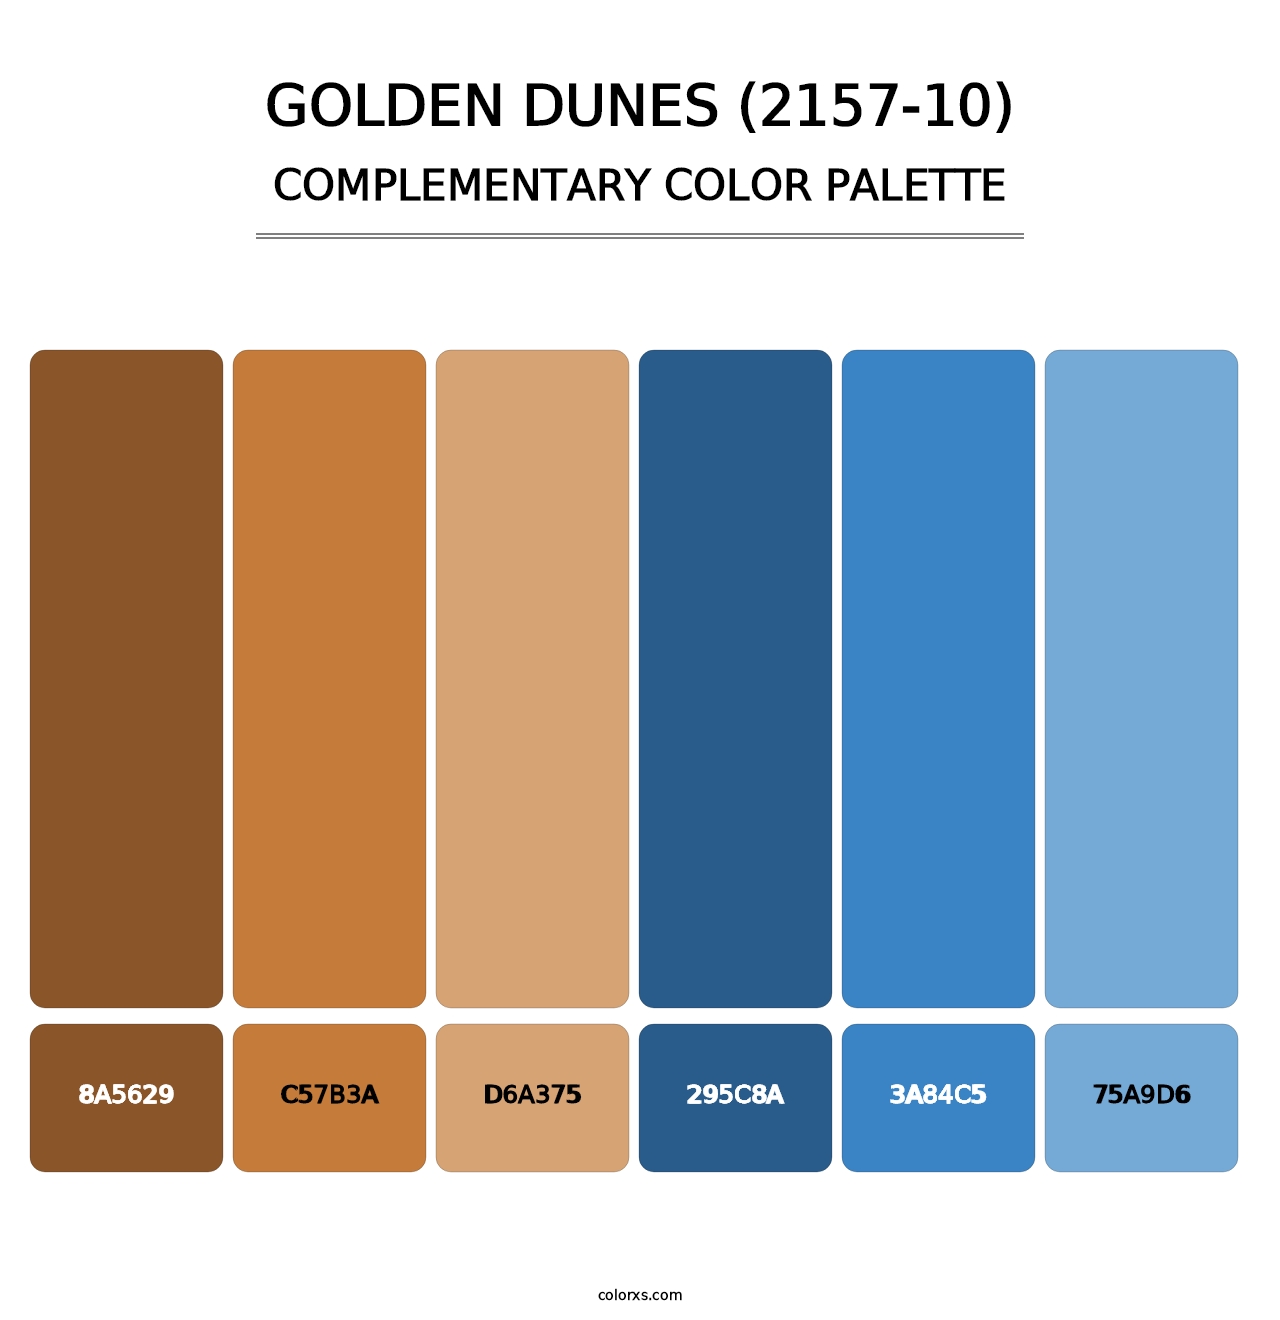 Golden Dunes (2157-10) - Complementary Color Palette